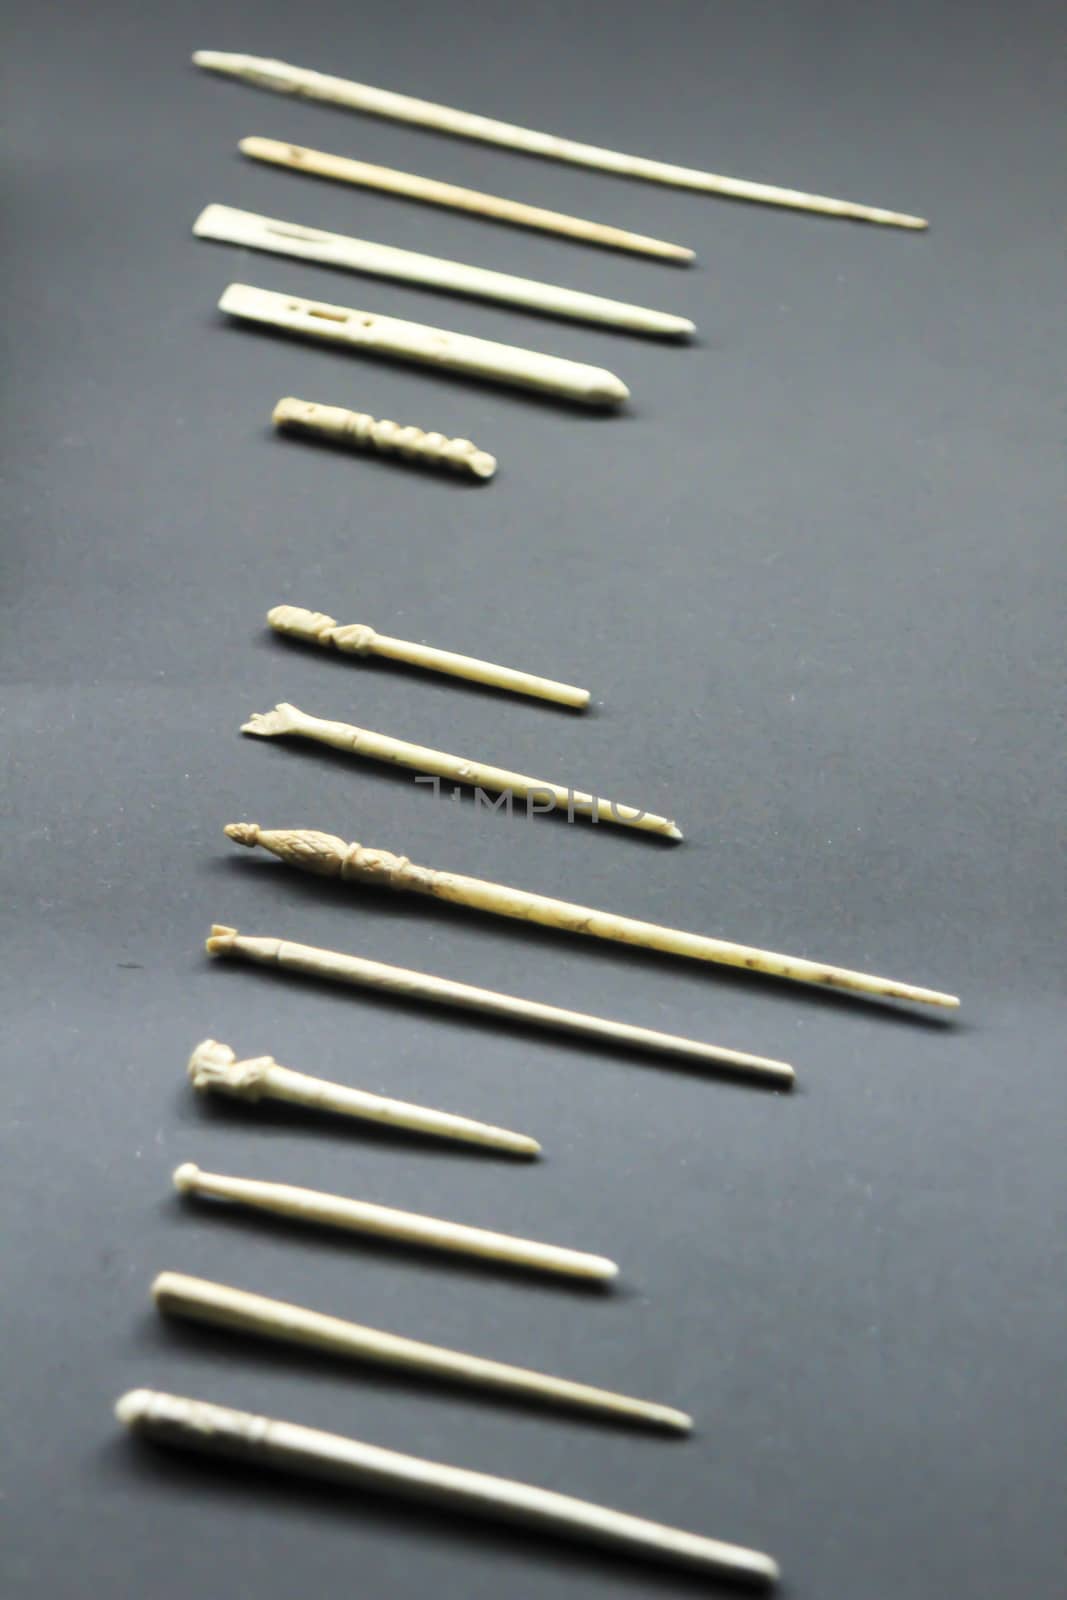 Roman Bone needles to hold hair of the 1st century by soniabonet